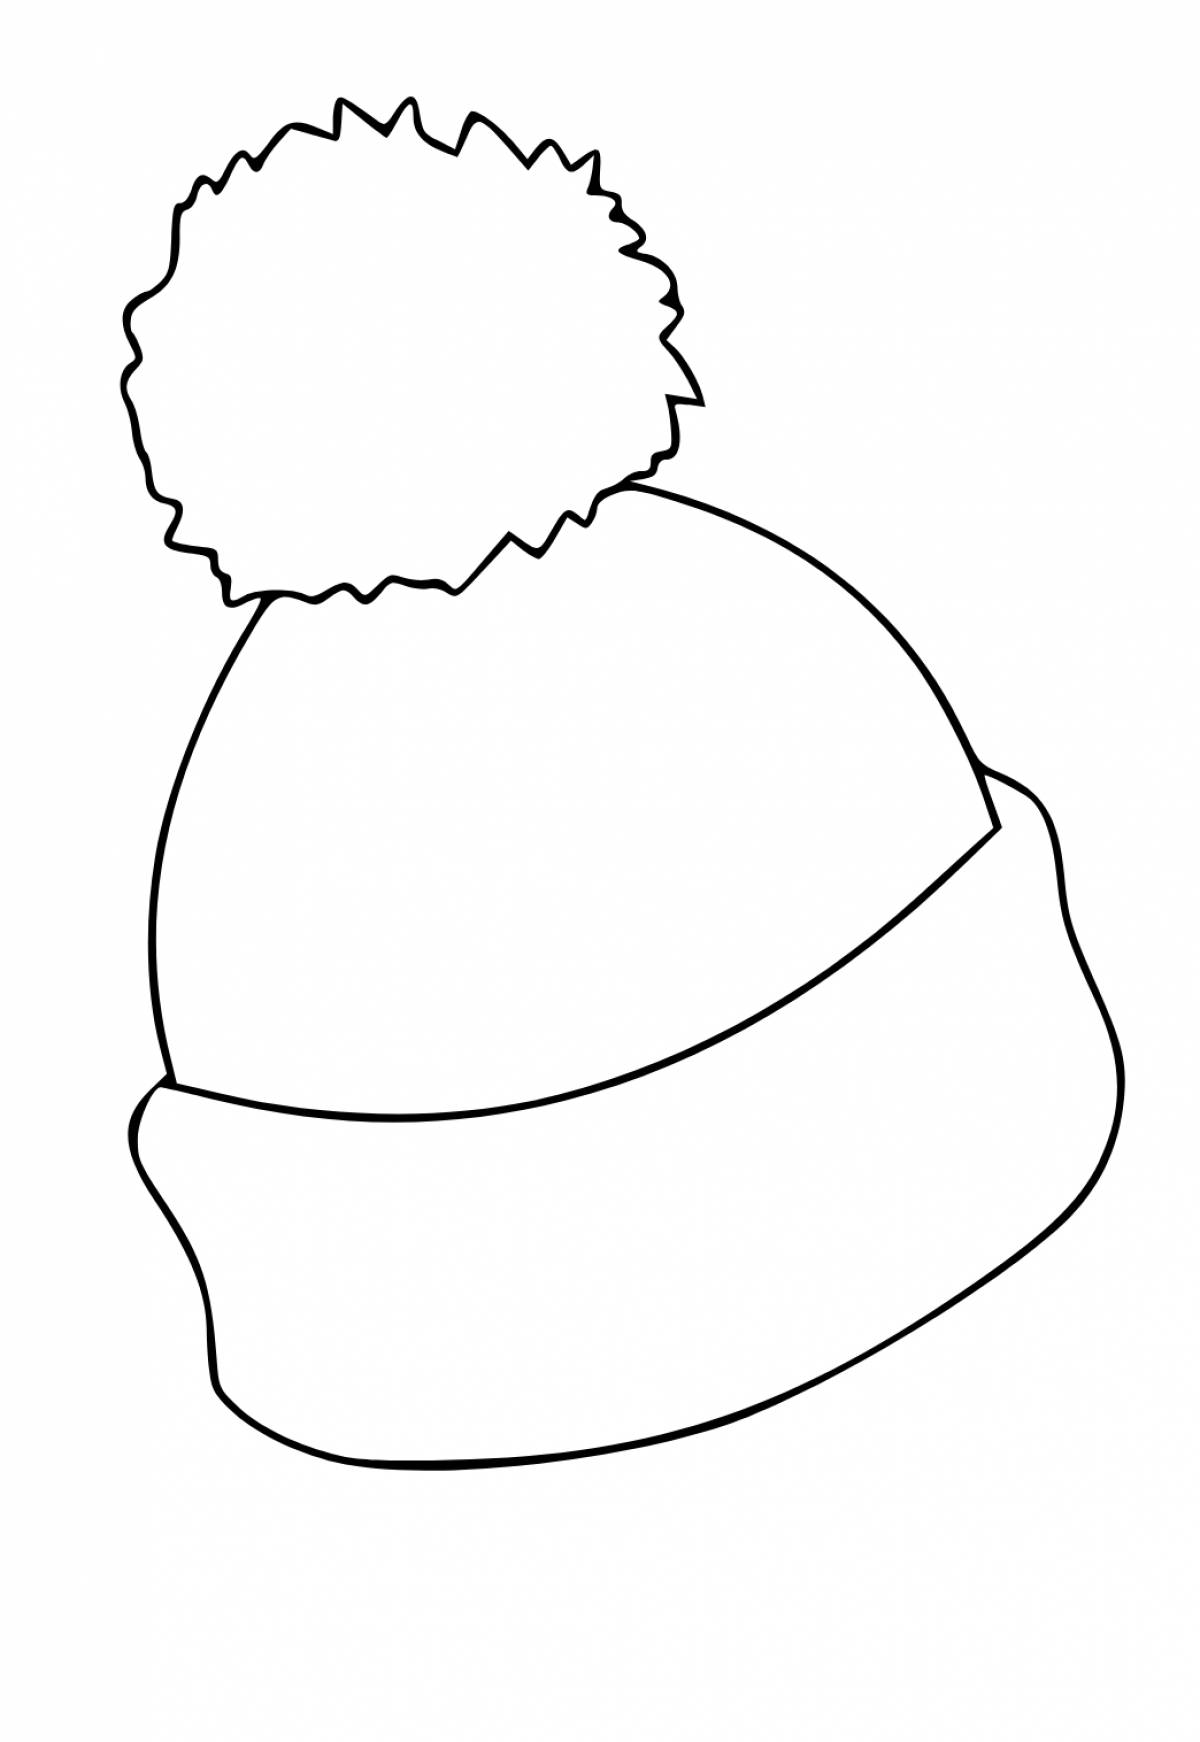 Раскраска гламурная шляпа для детей 4-5 лет